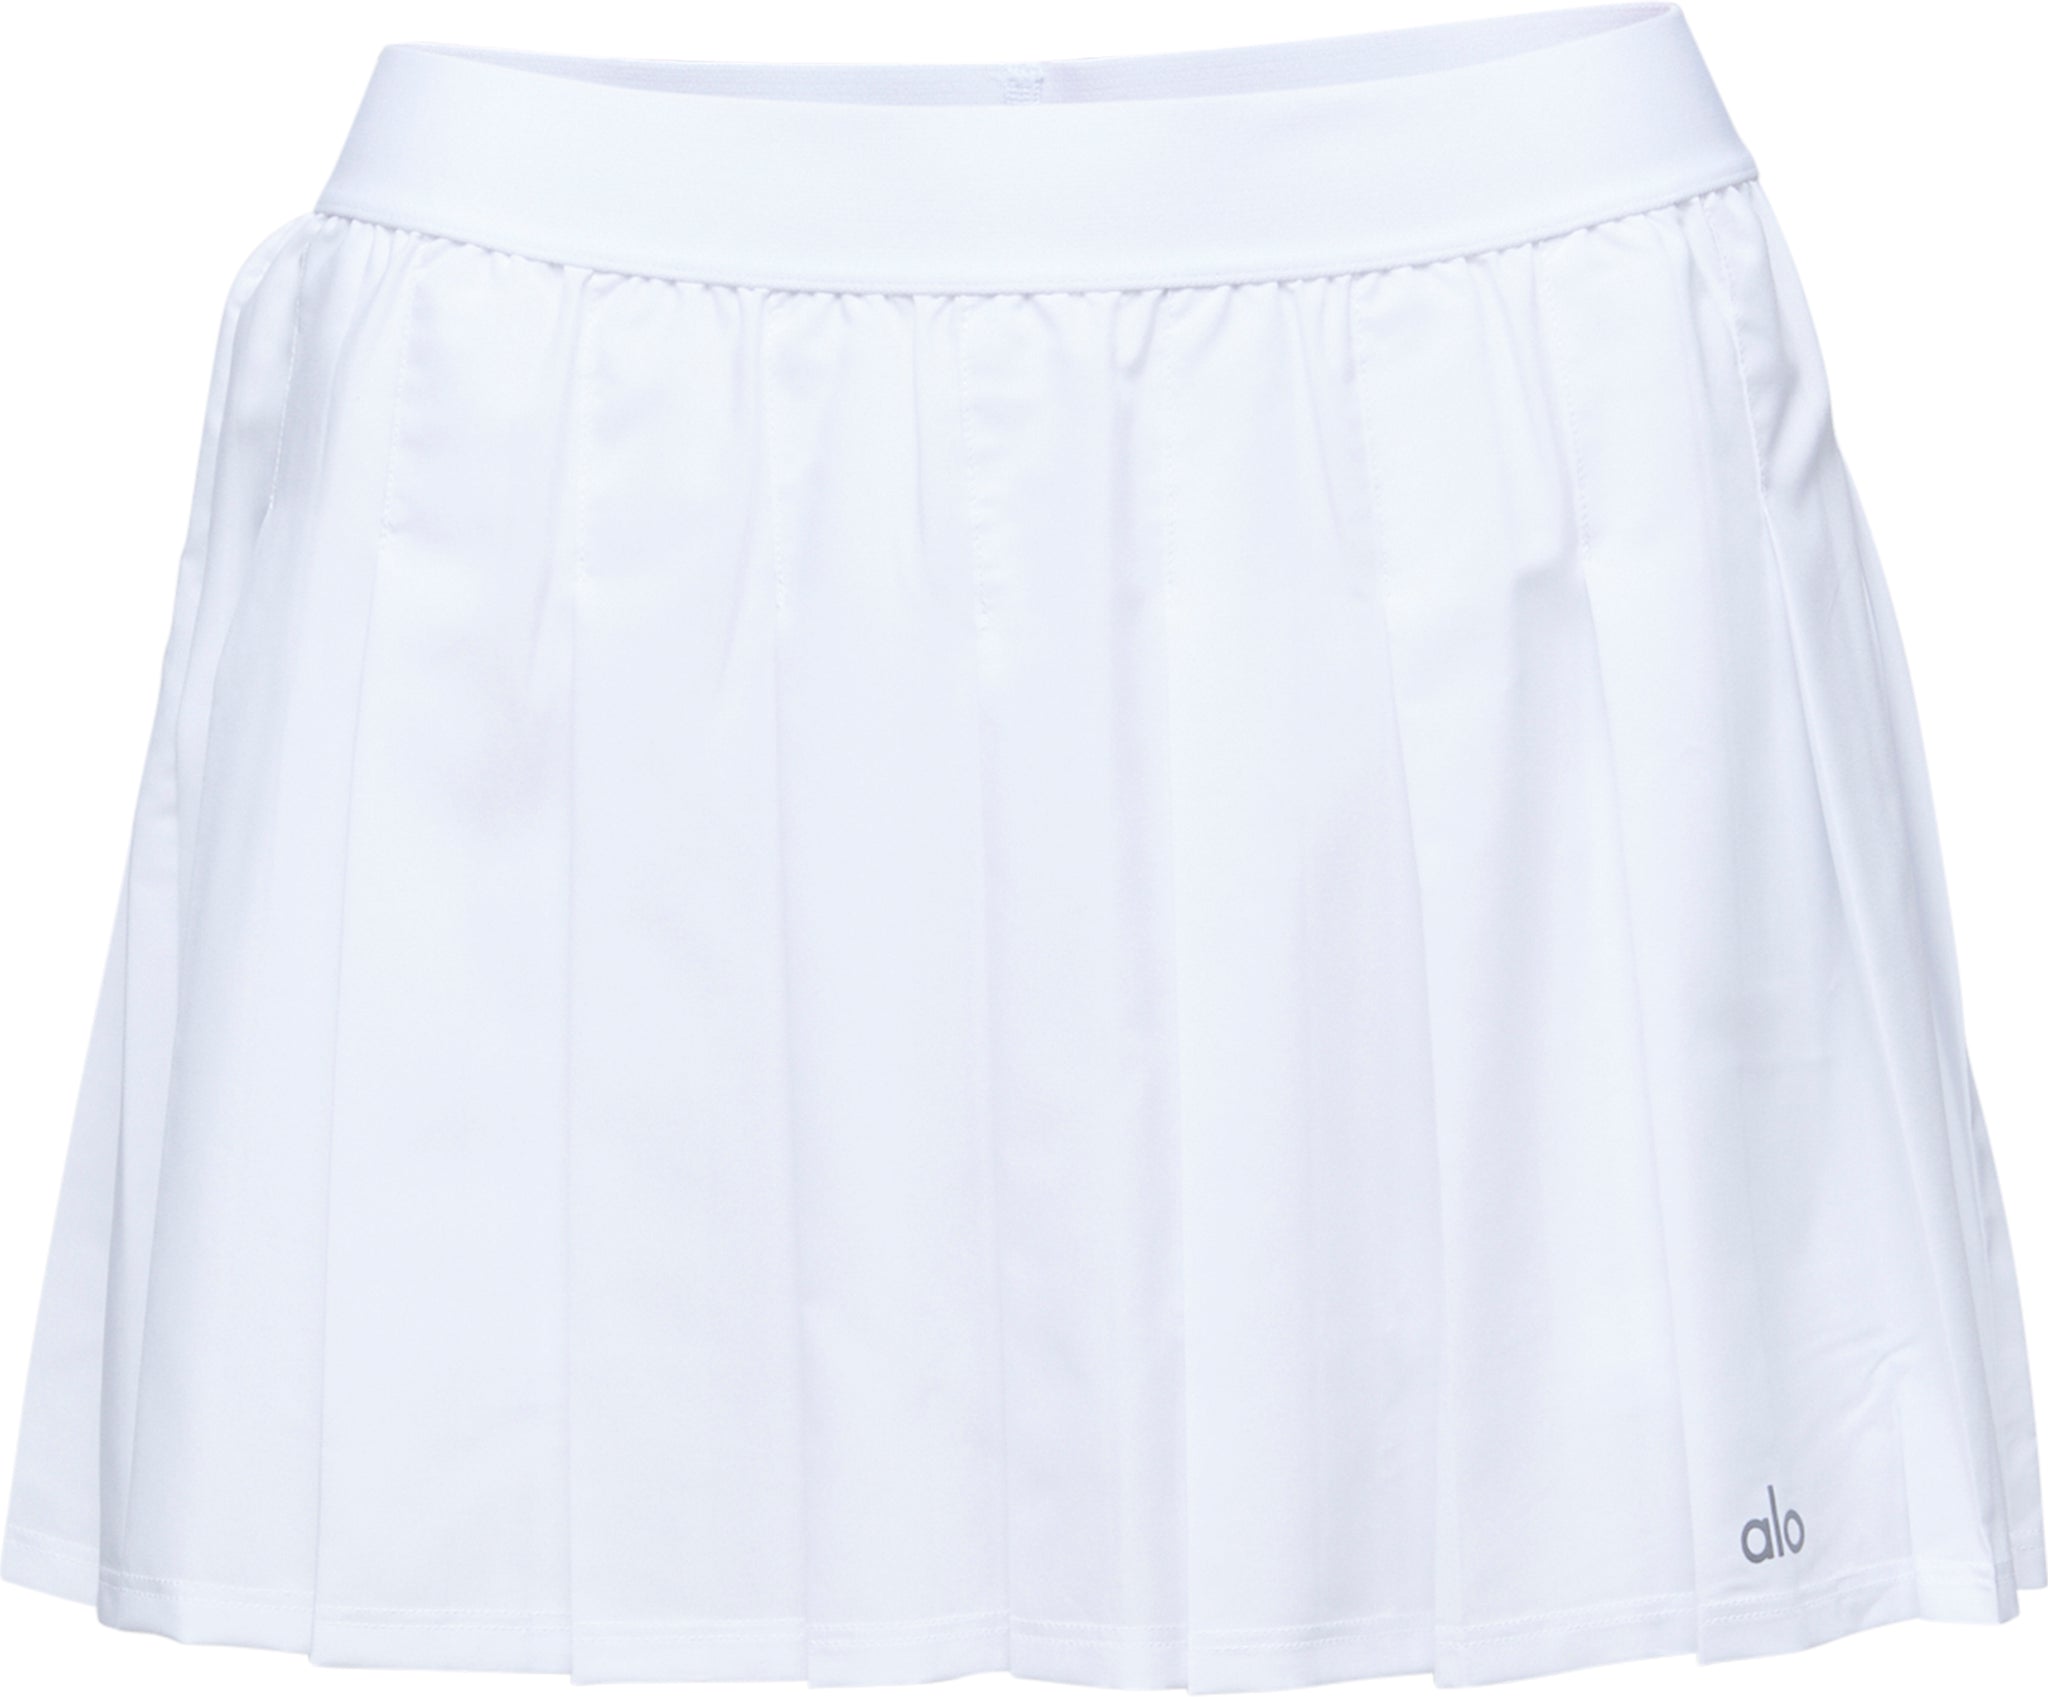 Alo Yoga Varsity Tennis Skirt